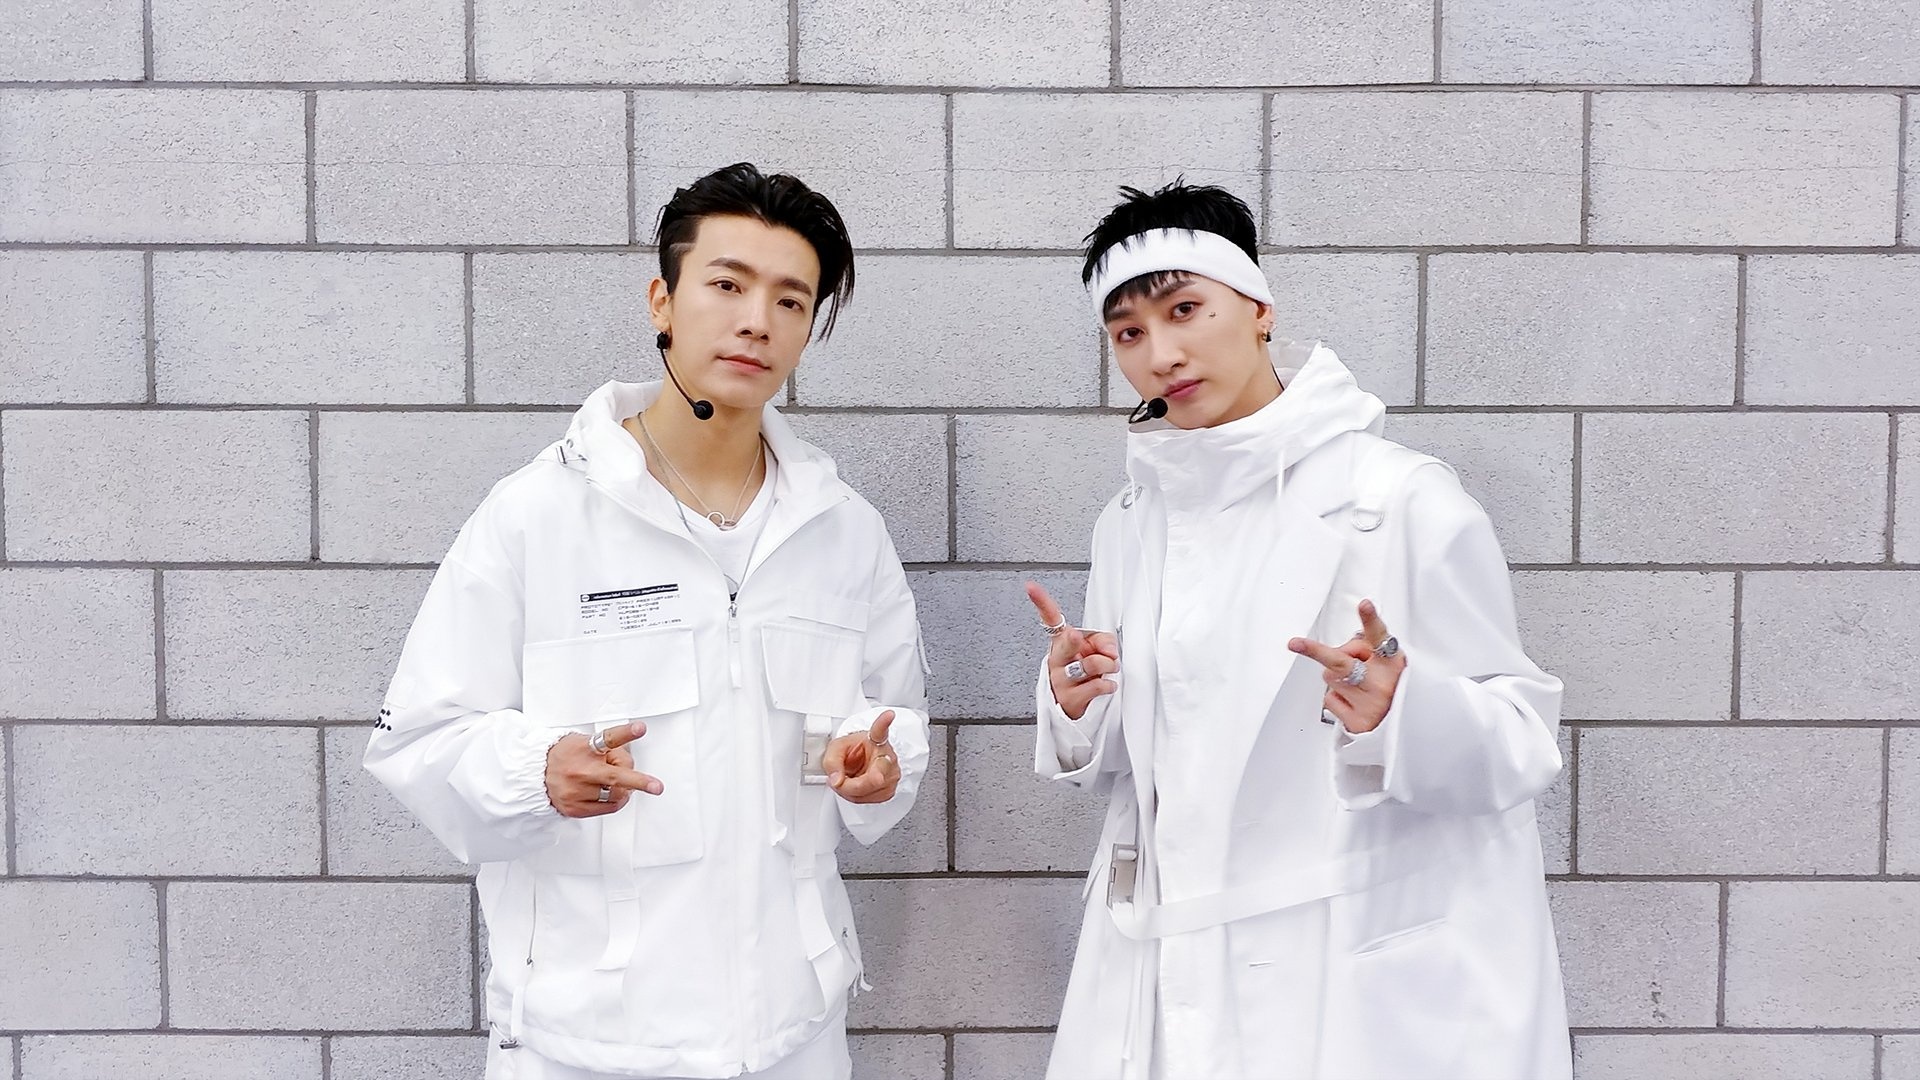 Donghae and Eunhyuk - Super Junior Wallpaper 42753040 - Fanpop 1920x1080